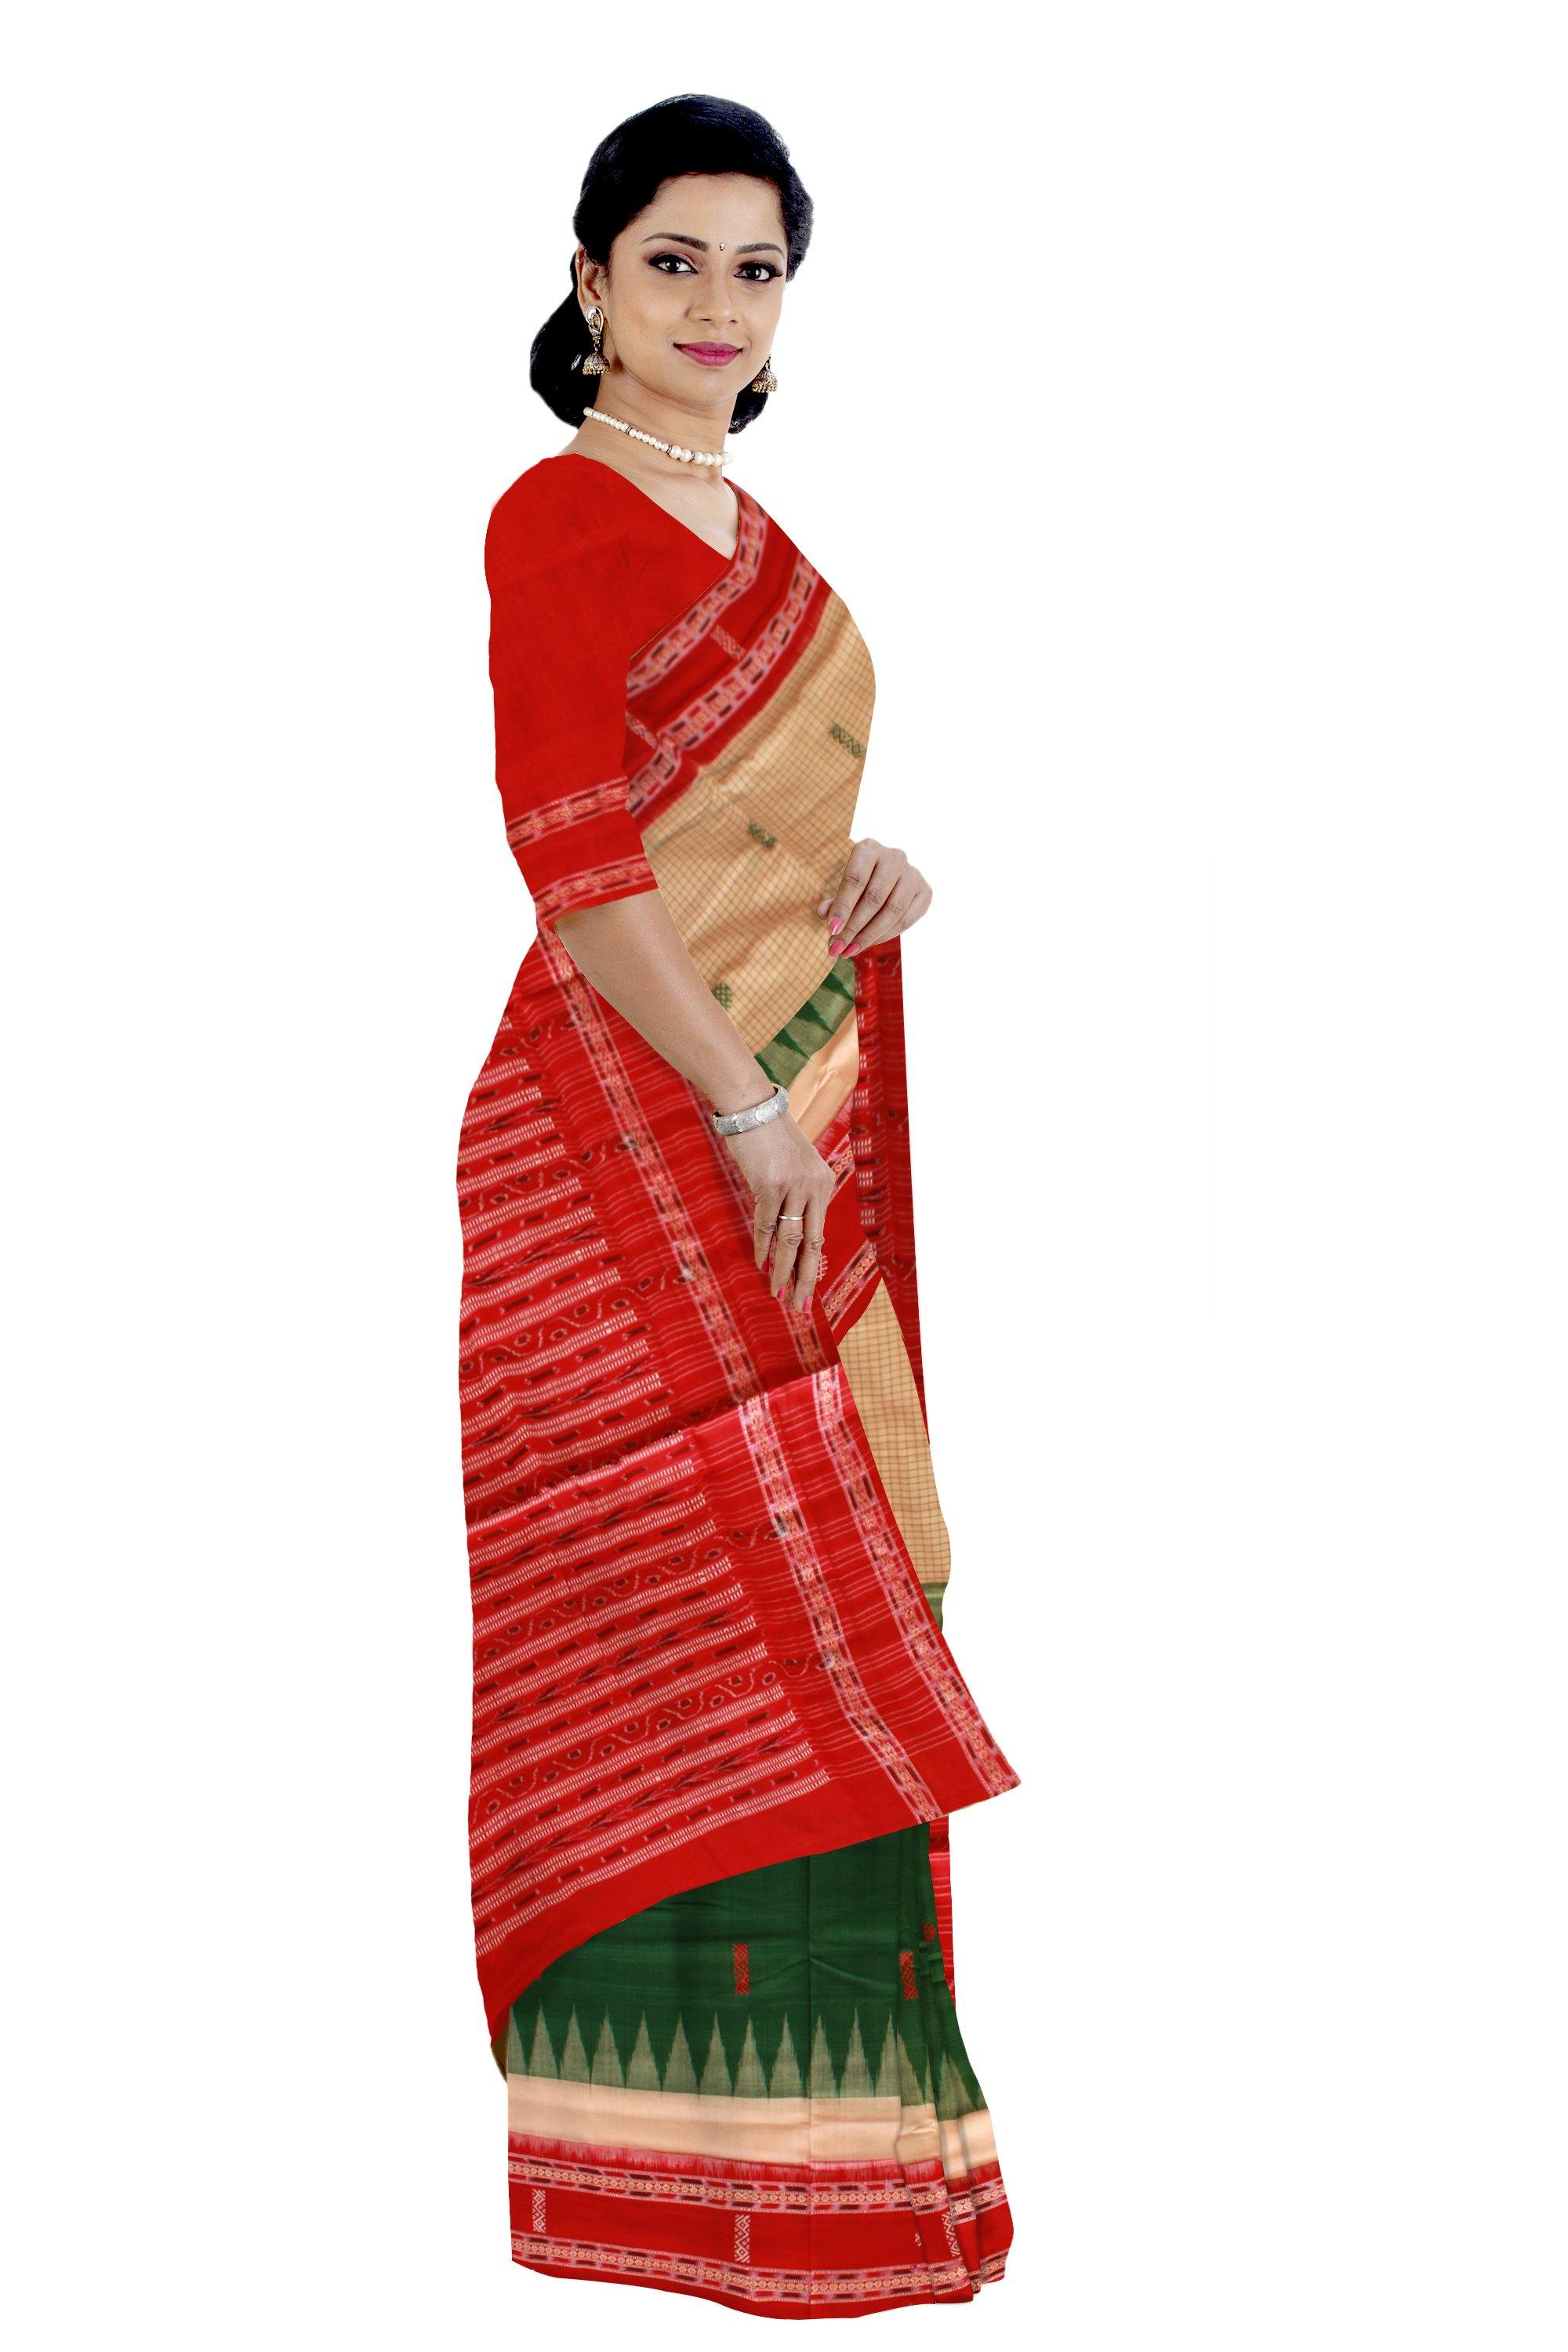 Sambalpuri bomkai saree in dual color with blouse piece. - Koshali Arts & Crafts Enterprise